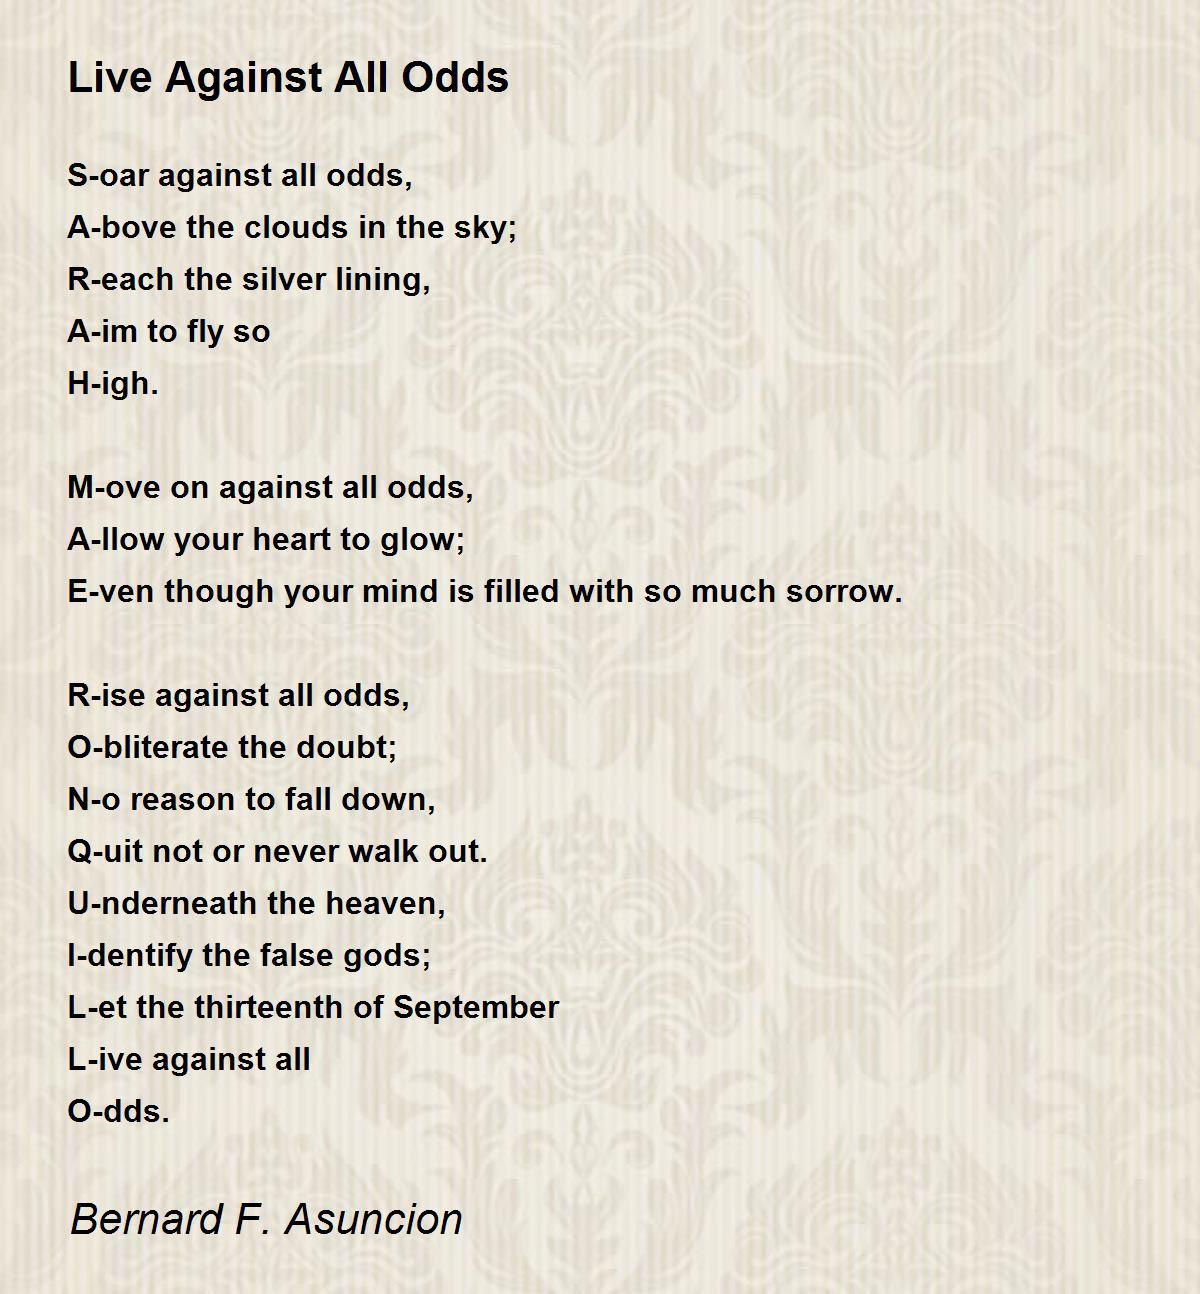 Against All Odds - Against All Odds Poem by Albashir Adam